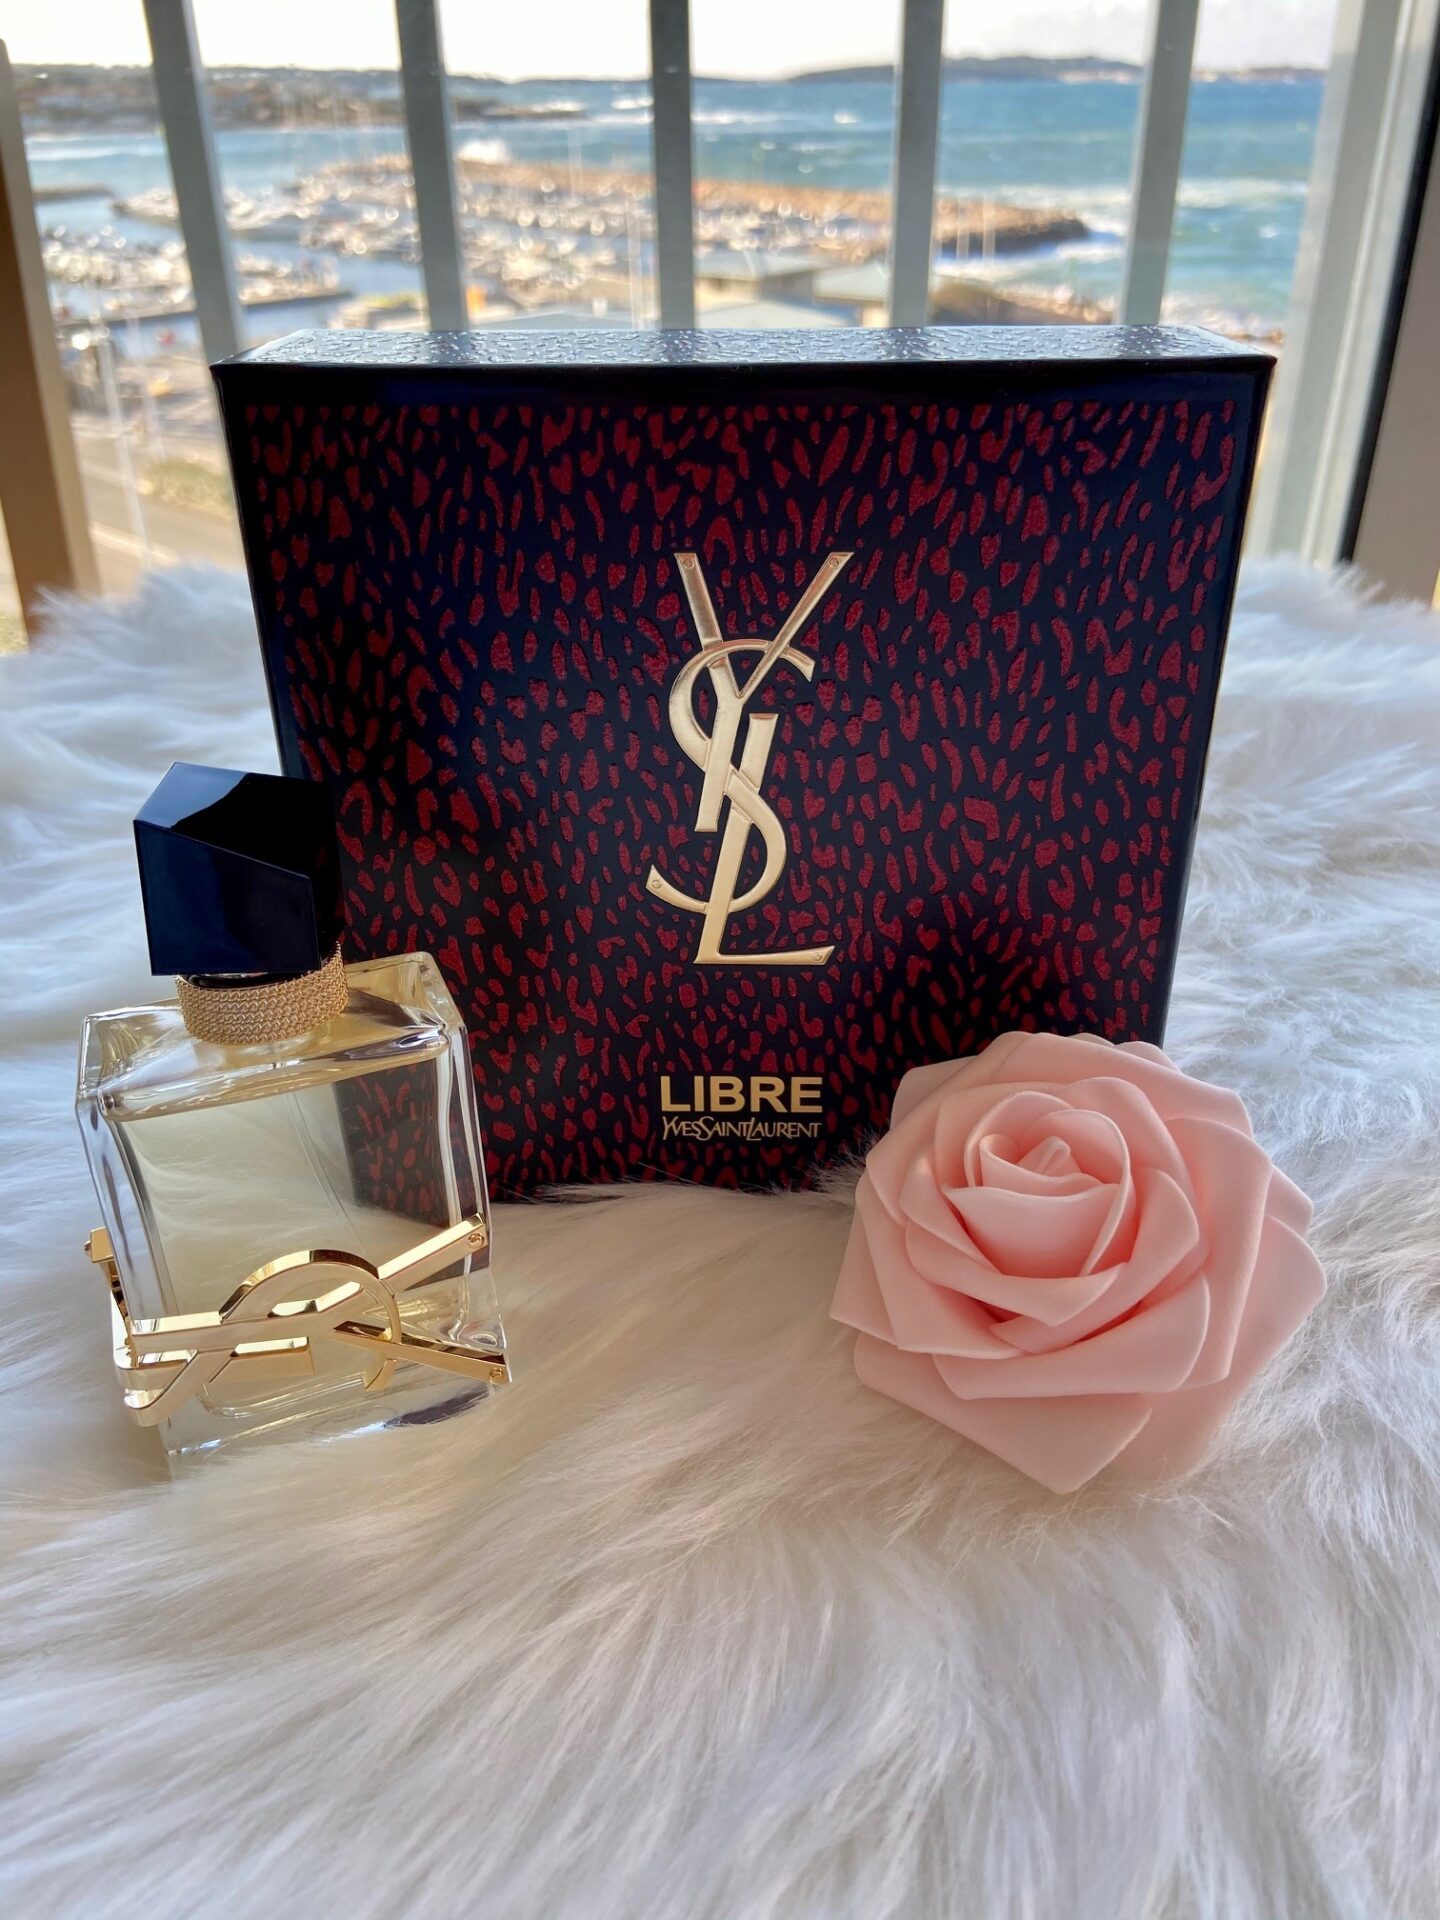 YSL Libre perfume luxury